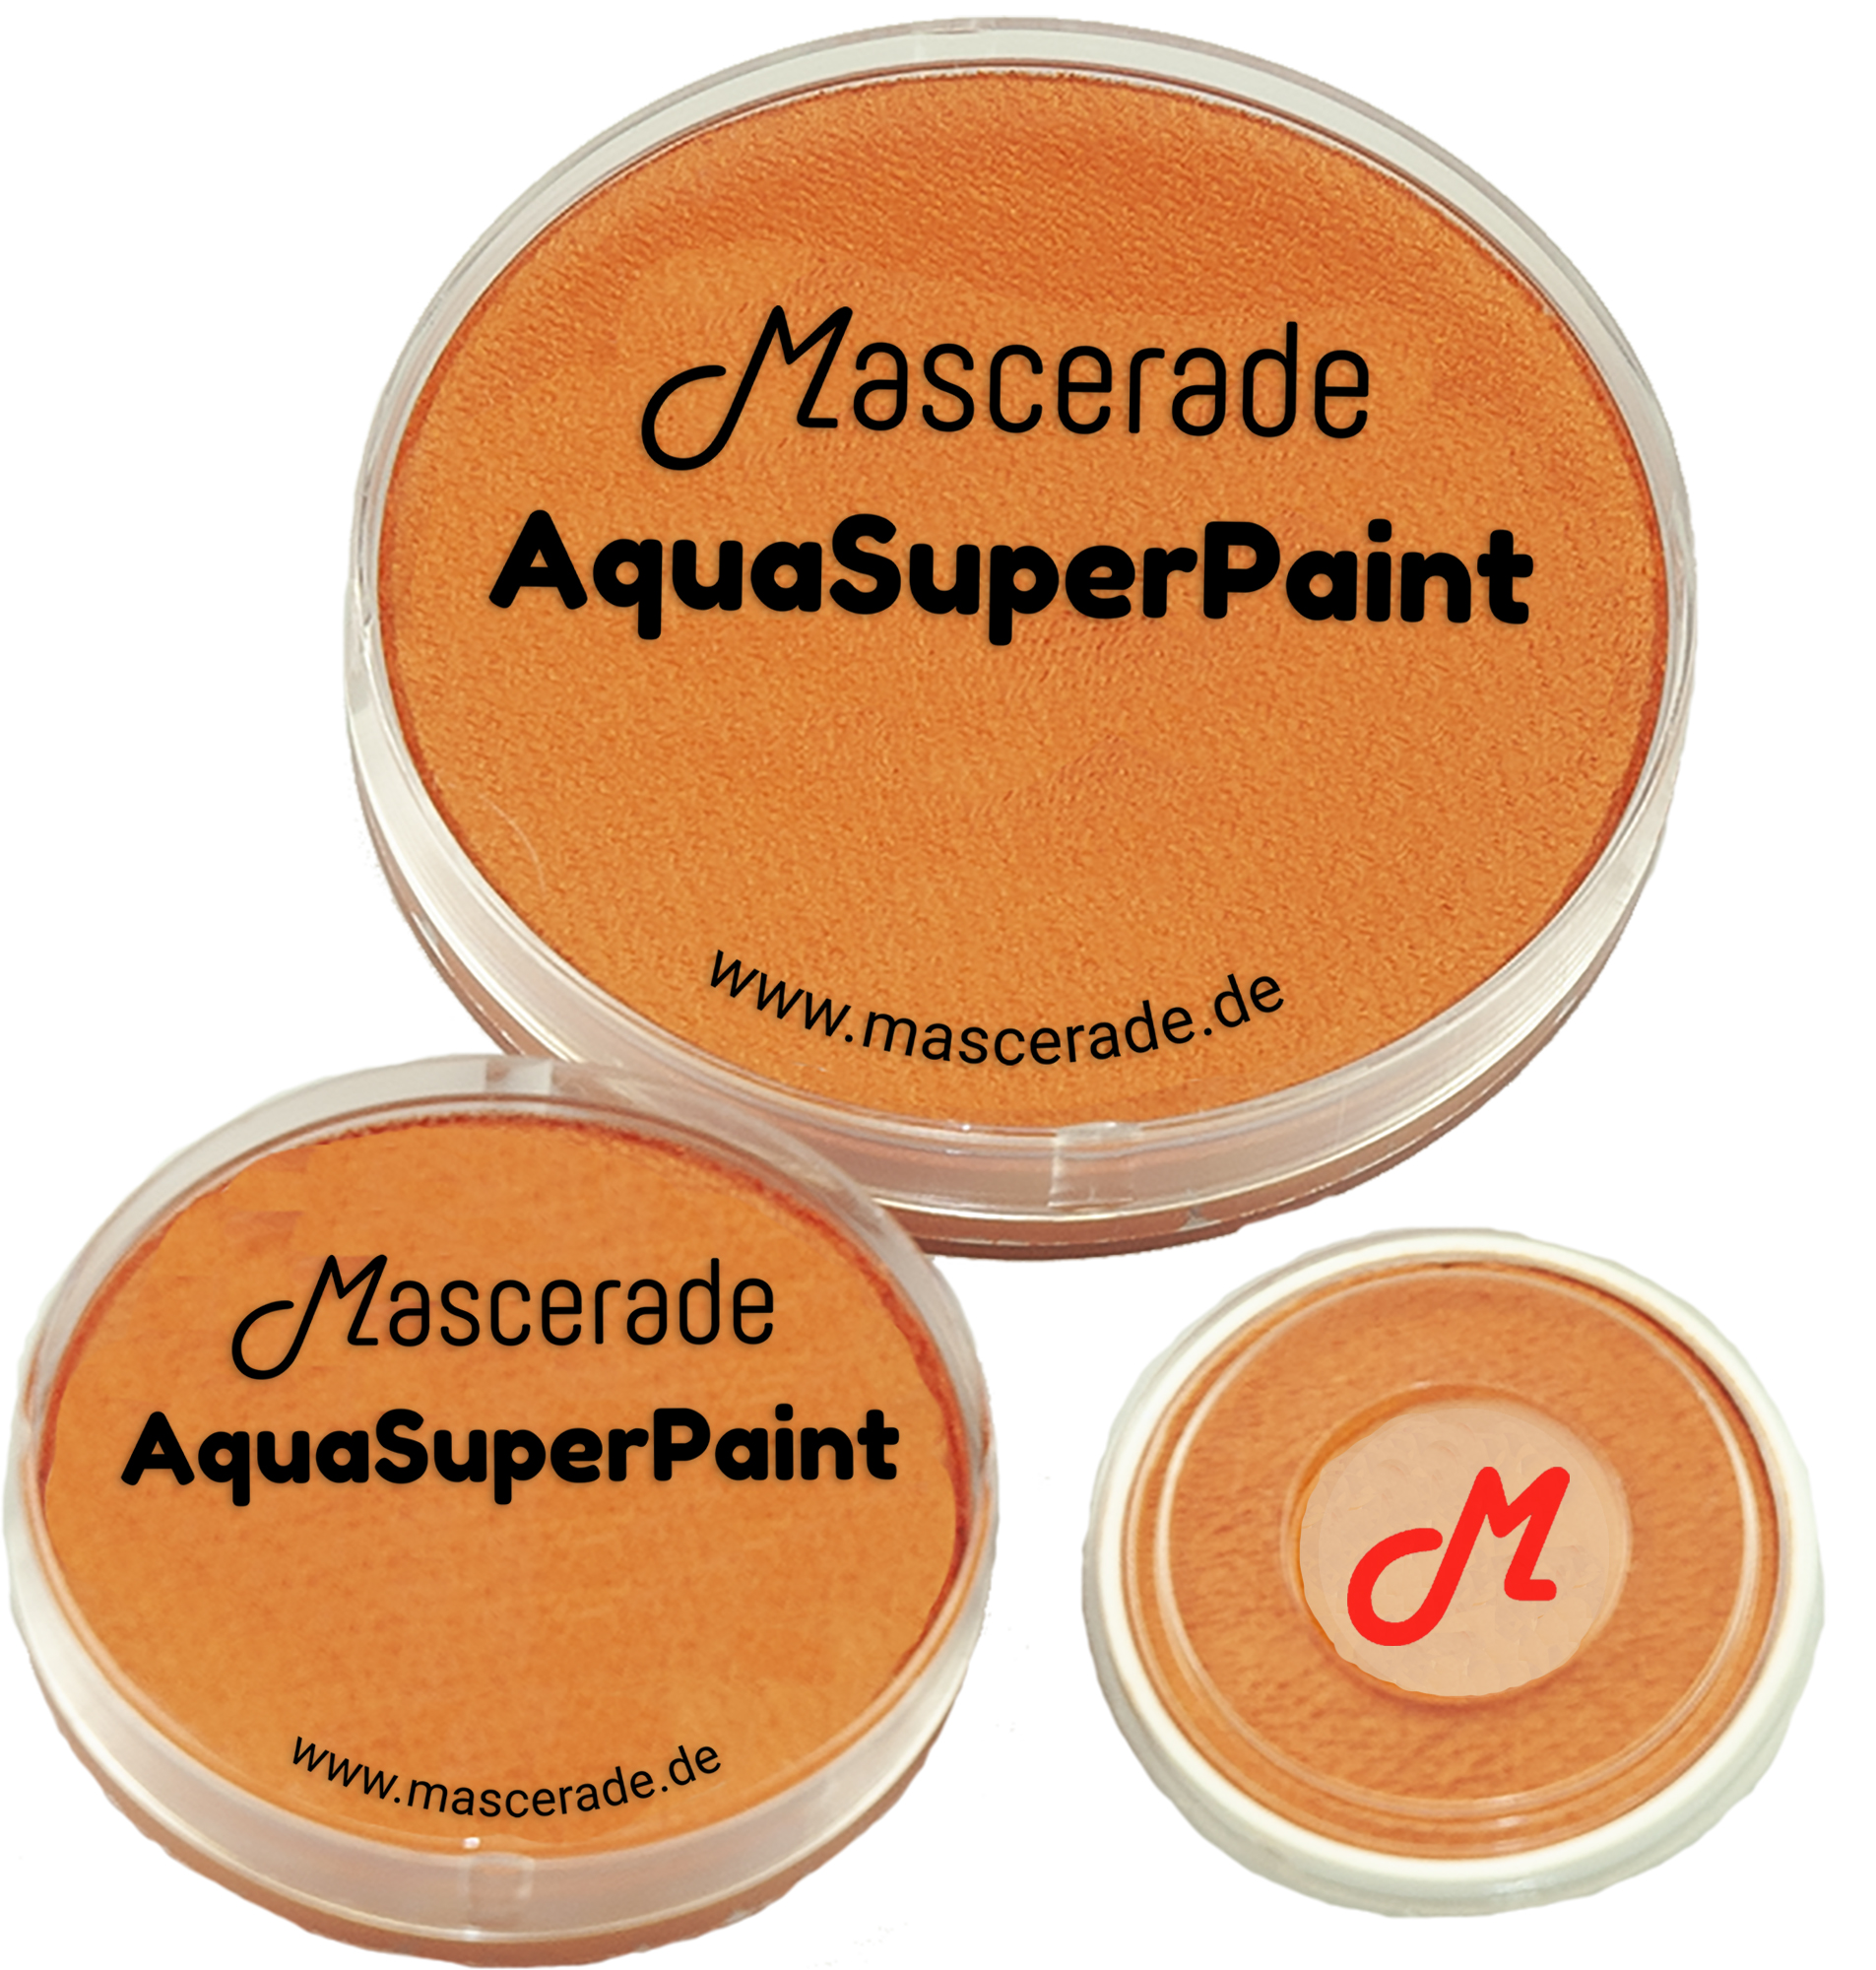 Mascerade AquaSuperPaint Orange mit Glitter Alle Gr